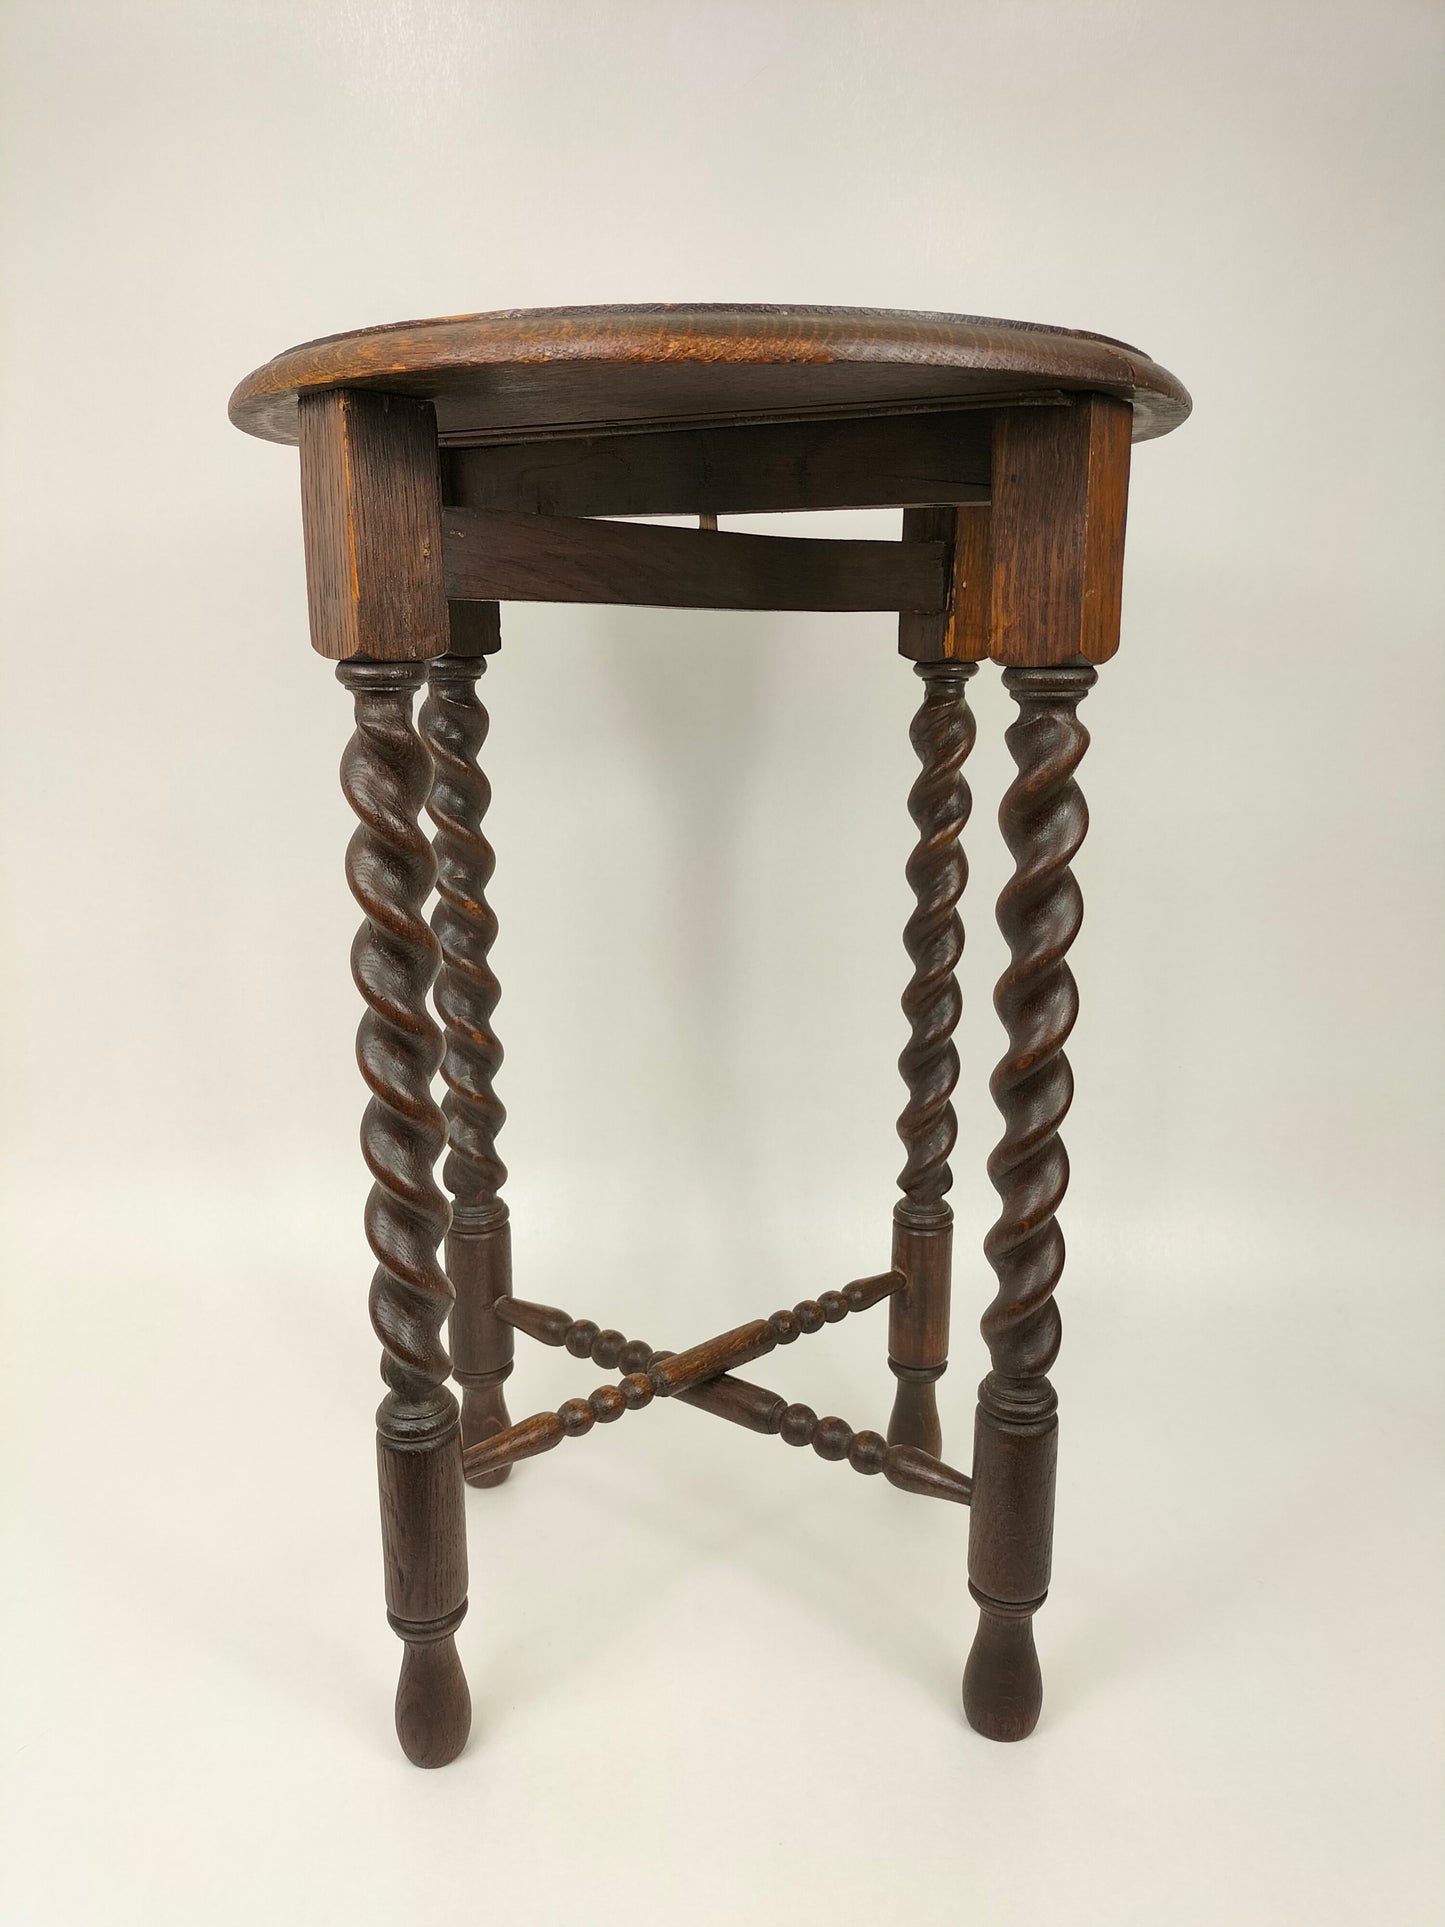 Antique oak "barley twist" folding table // England - Early 20th century